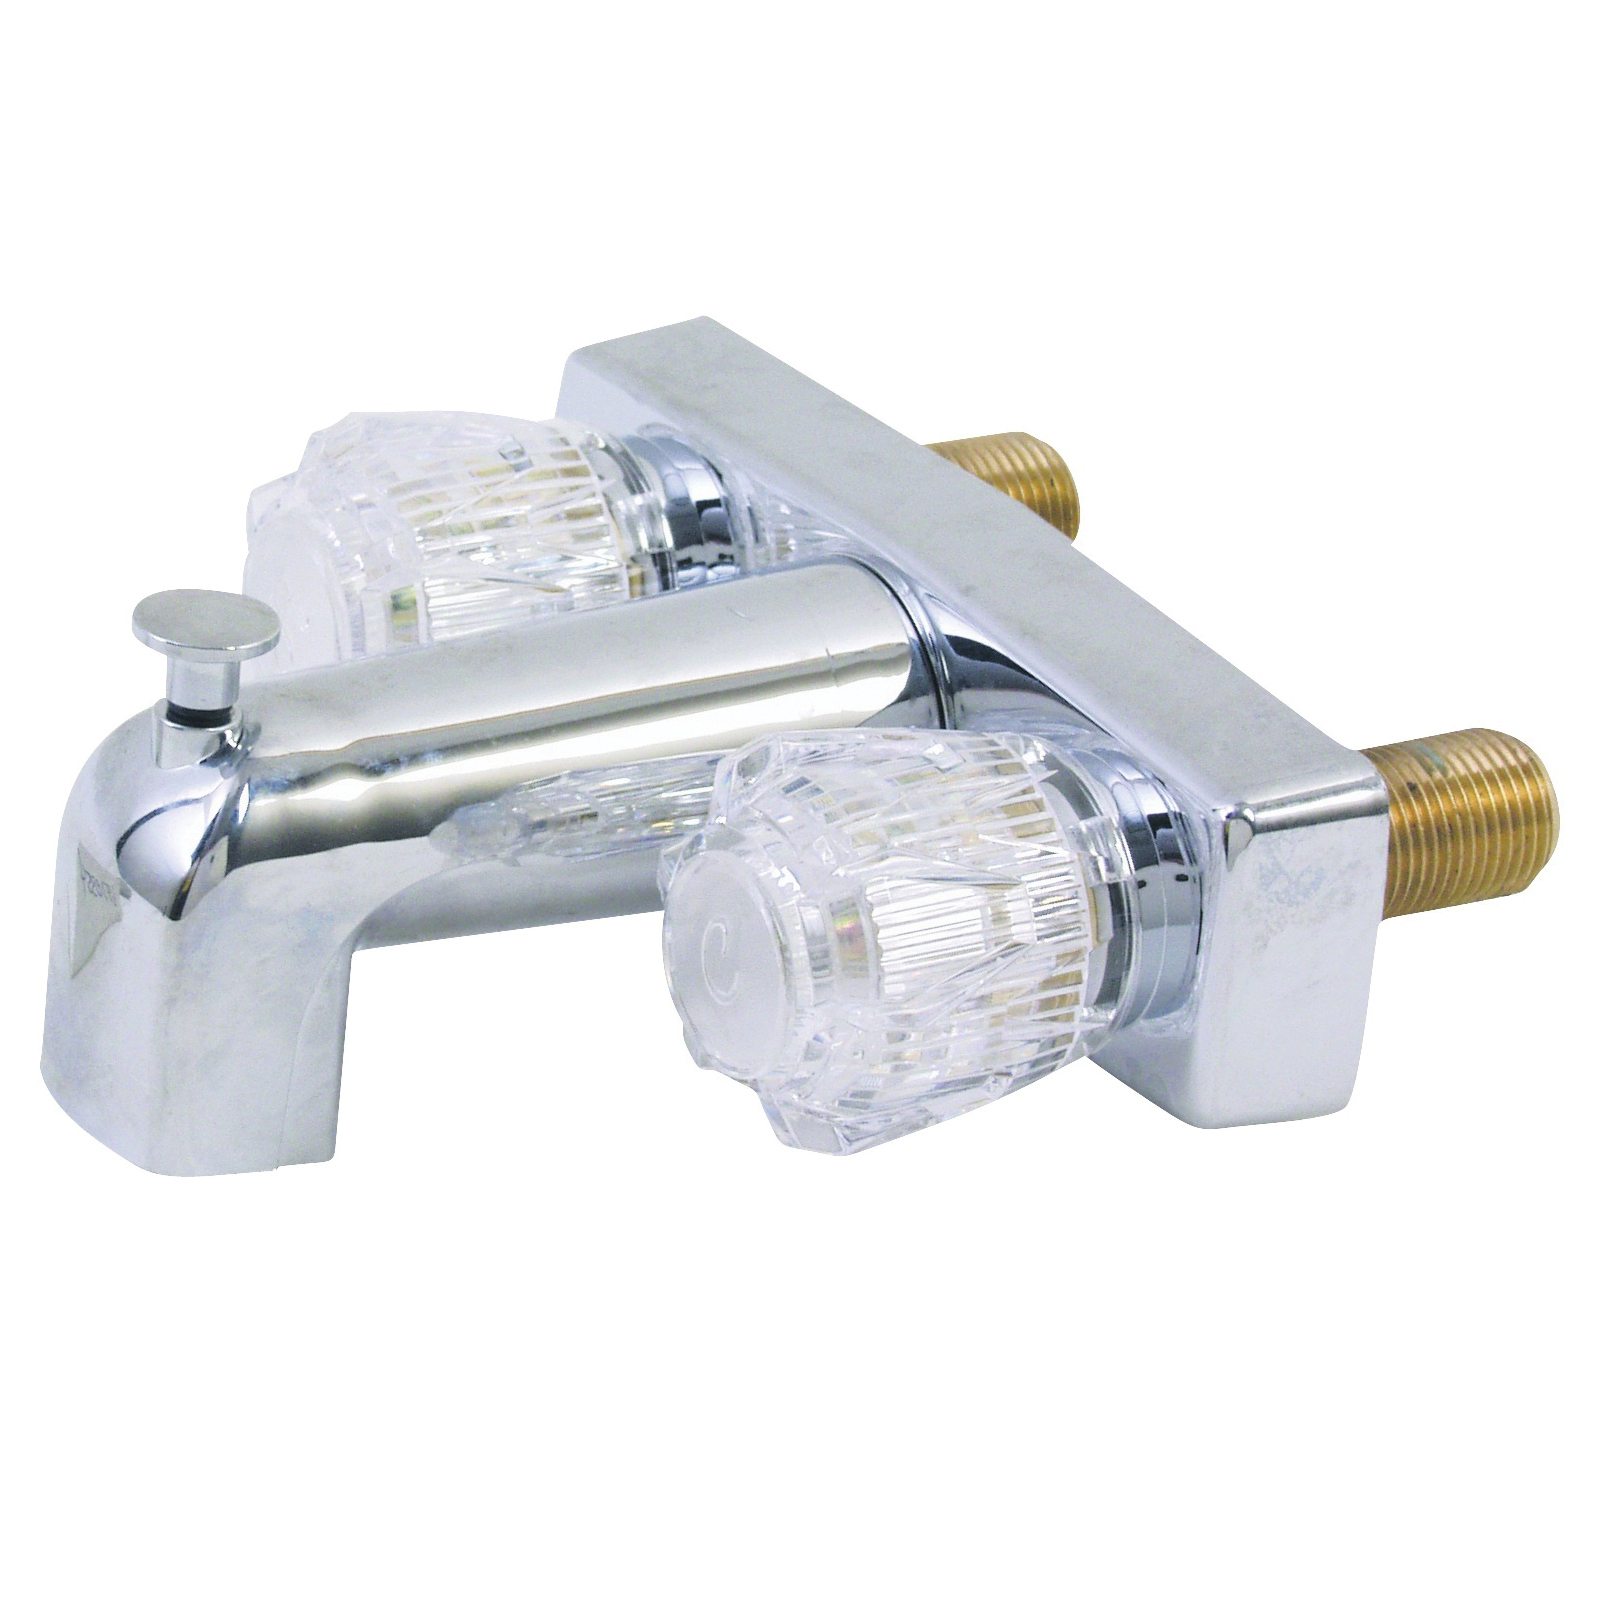 P-009NB Faucet Diverter, Brass, Chrome